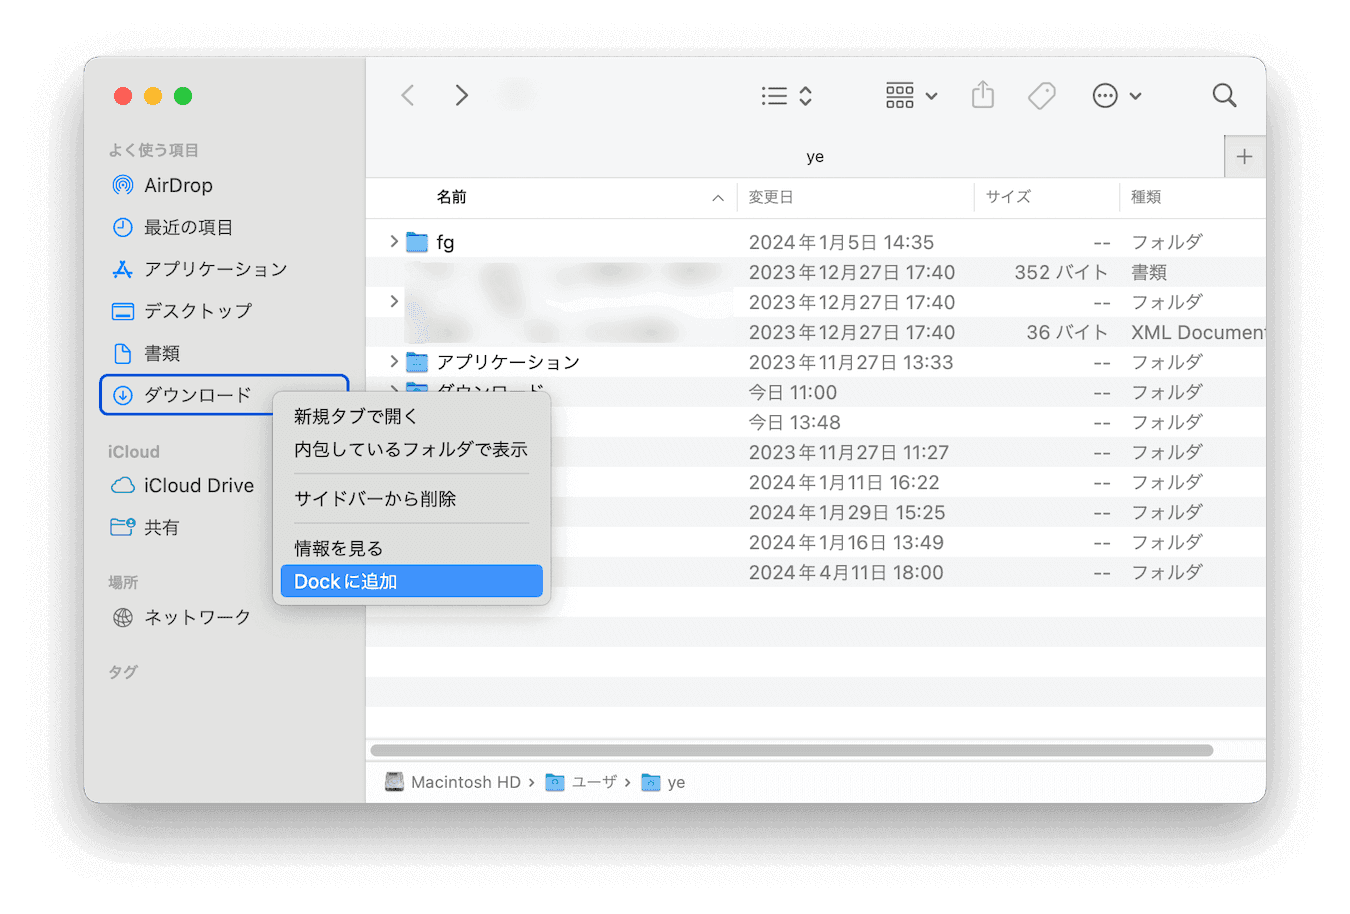 add-download-folder-to-dock-jp.png